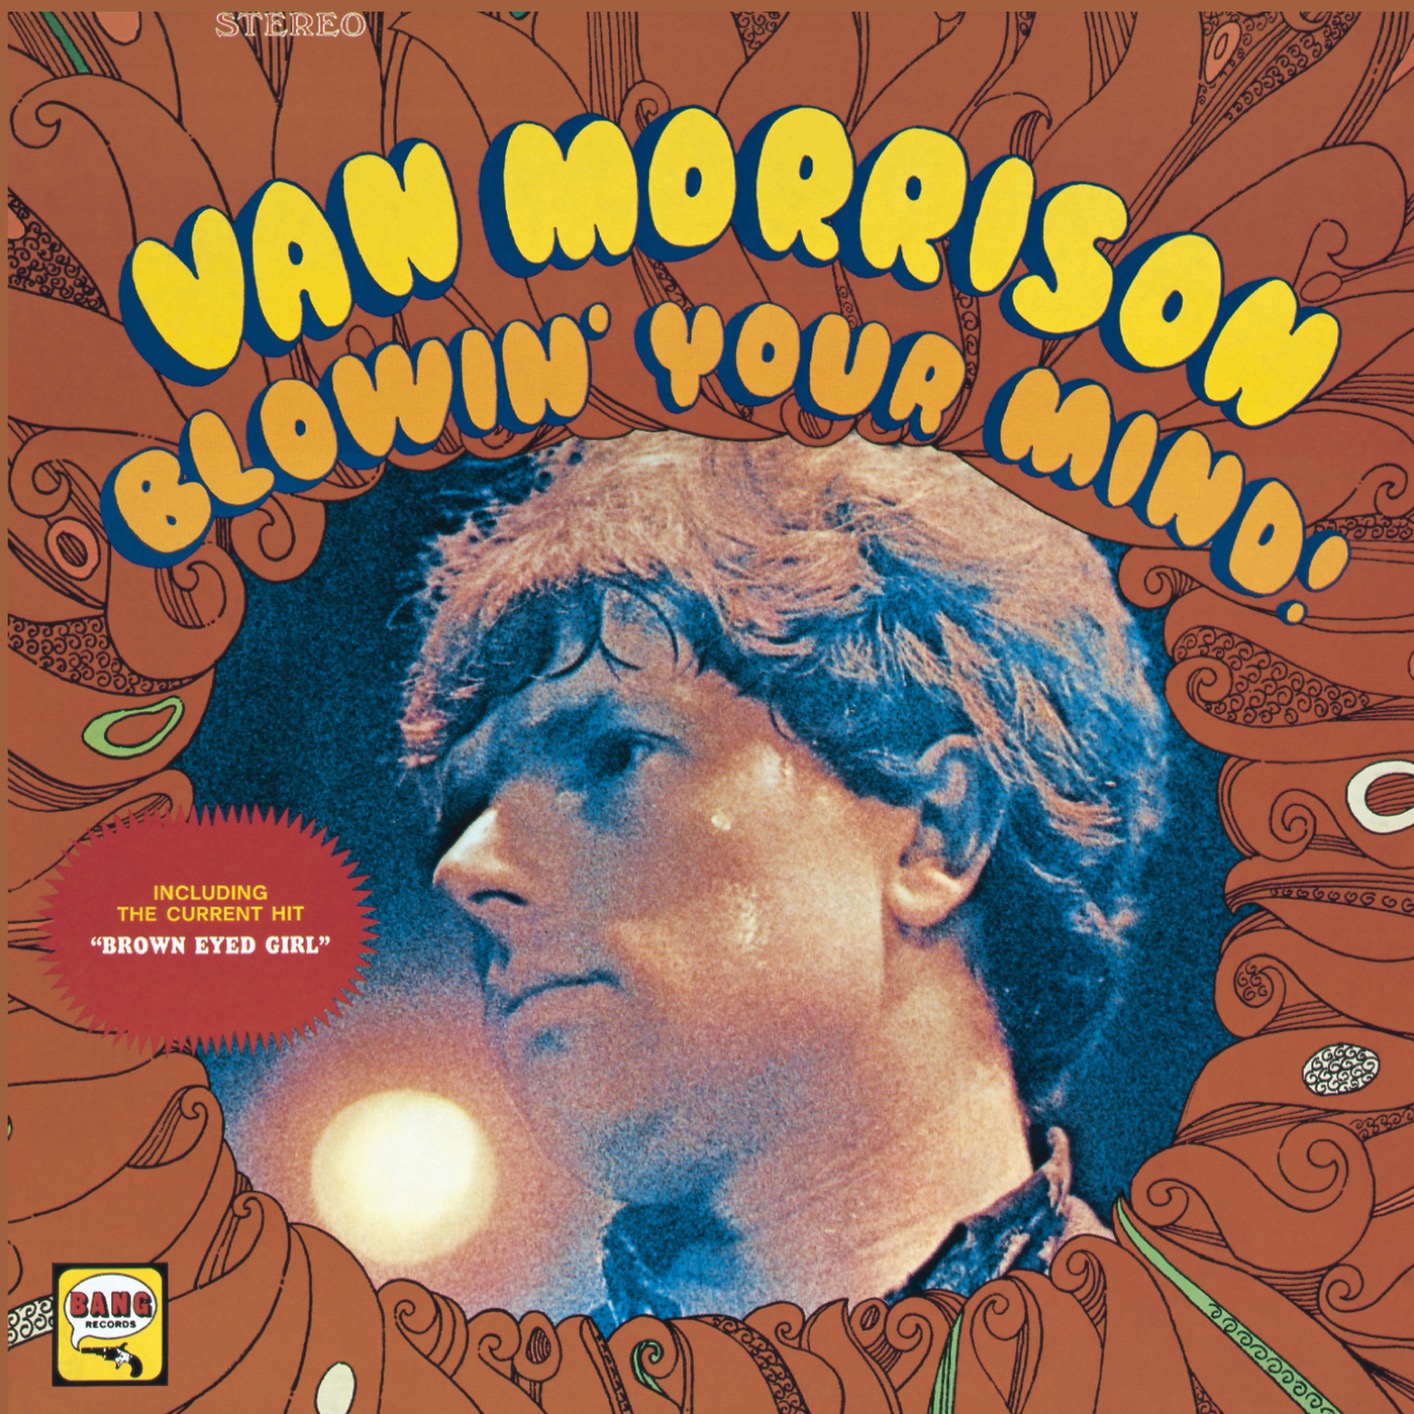 Van Morrison – Blowin’ Your Mind! (Remastered) (1967/2020) [FLAC 24bit/192kHz]